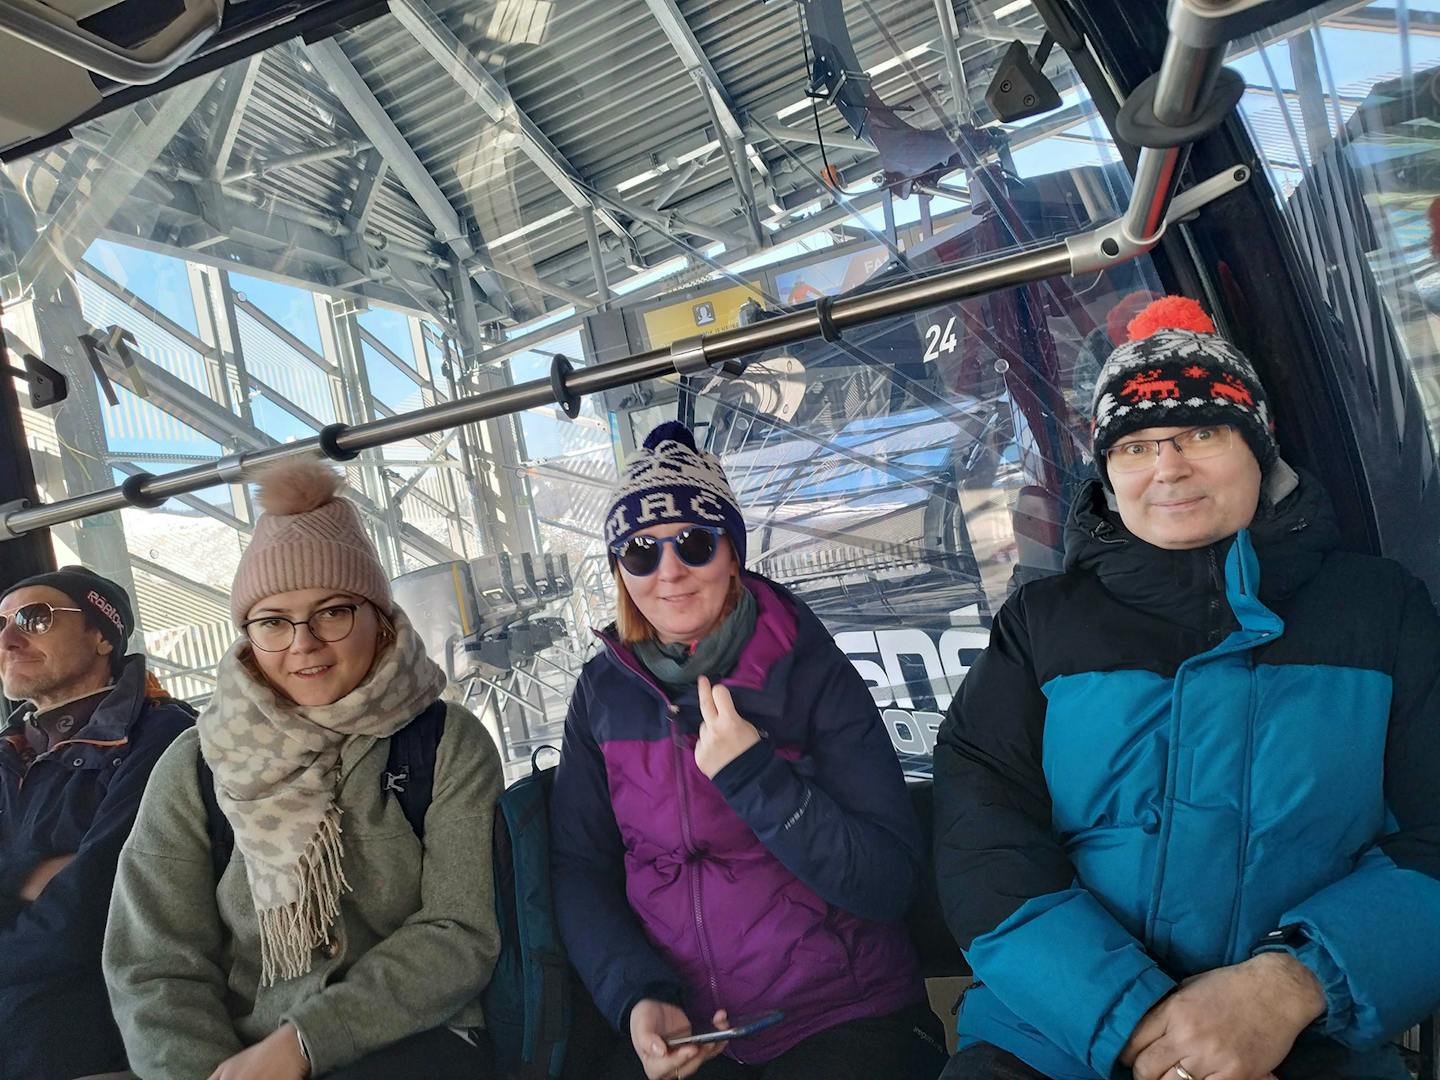 Three members of the Xfive team on a ski lift during the company's ski weekend.